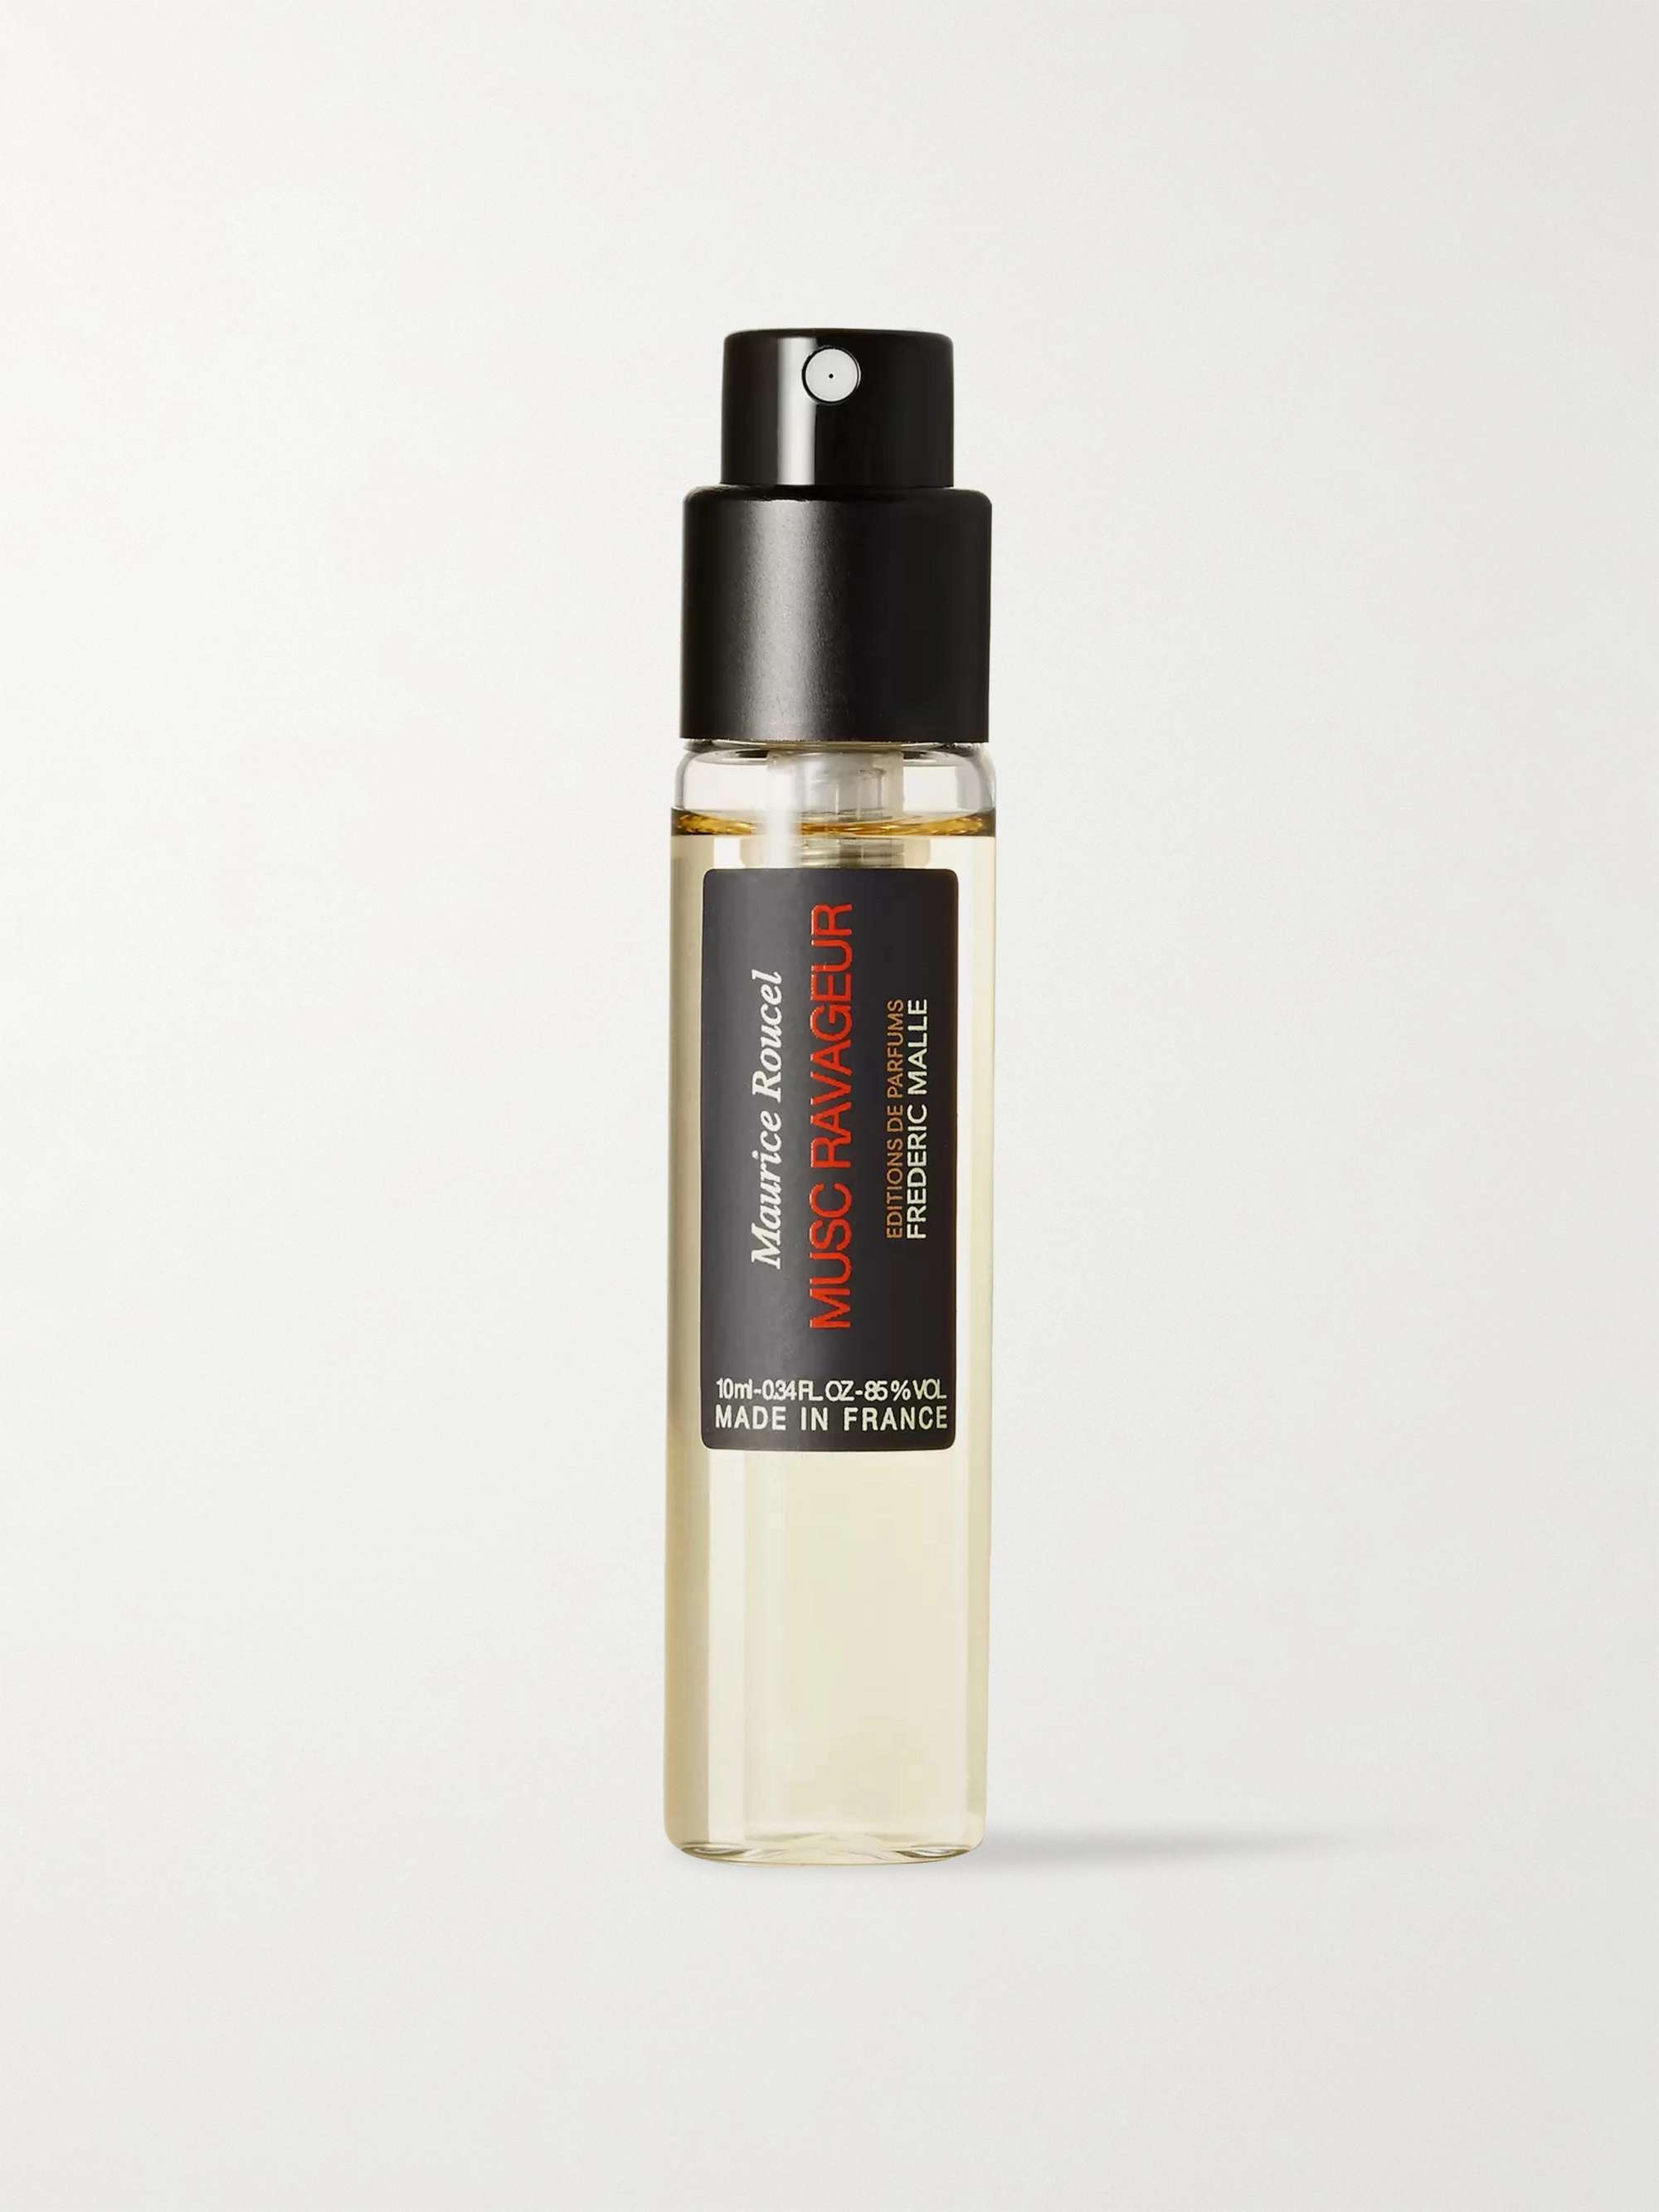 Frederic Malle Musc Ravageur Eau de Parfum - Musk & Amber, 10ml